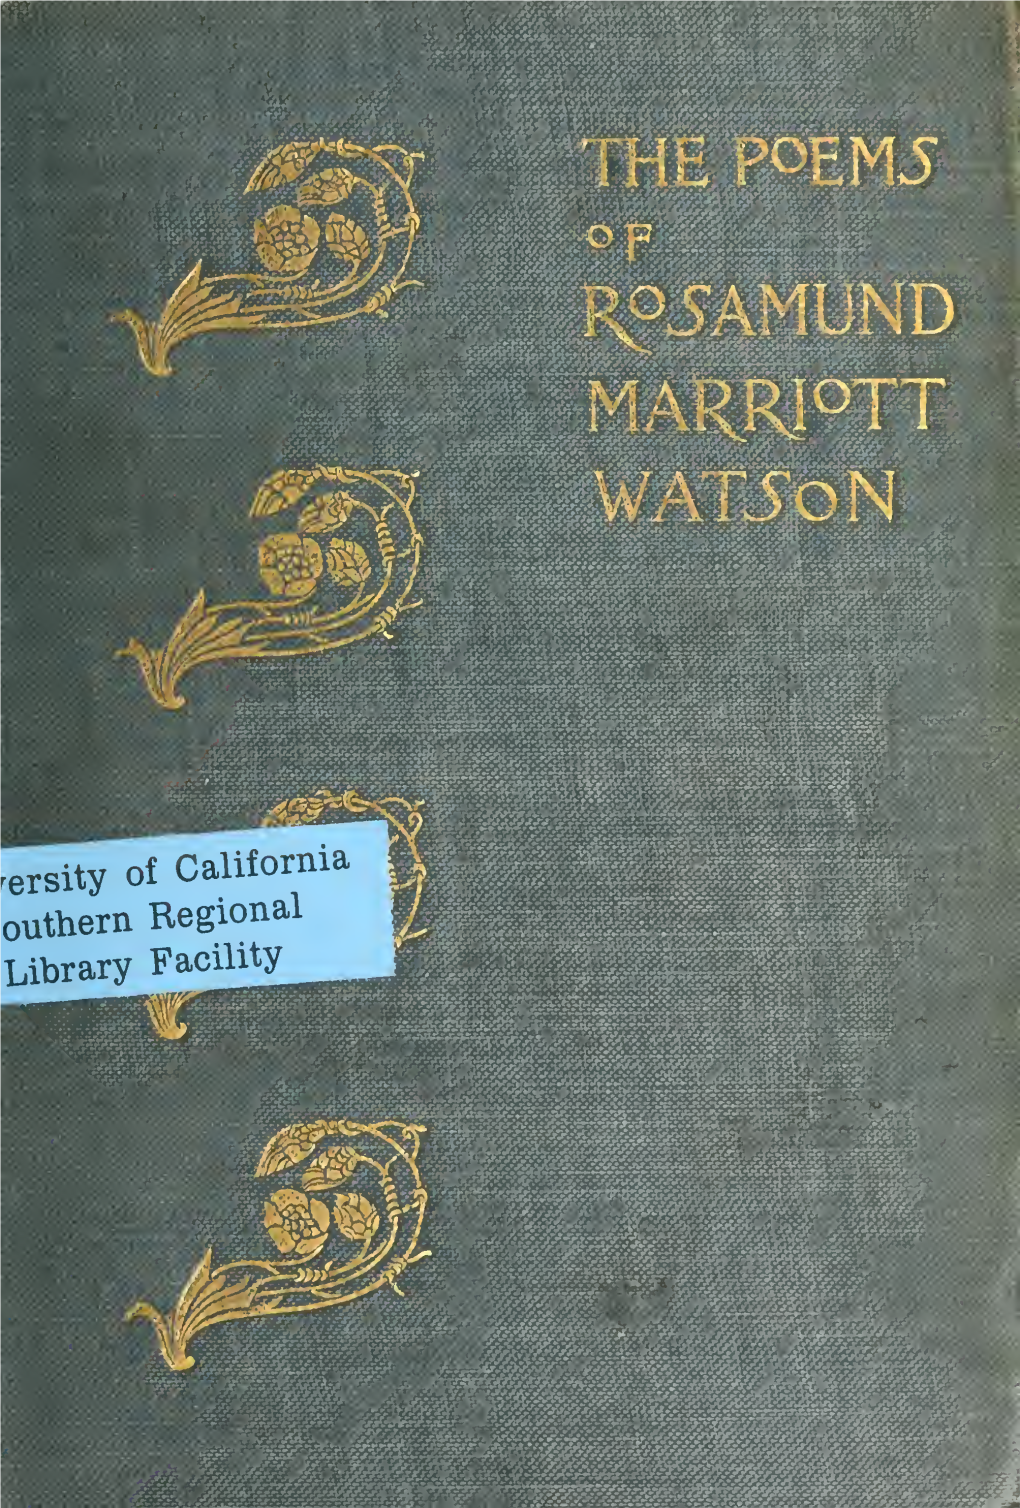 The Poems of Rosamund Marriott Watson